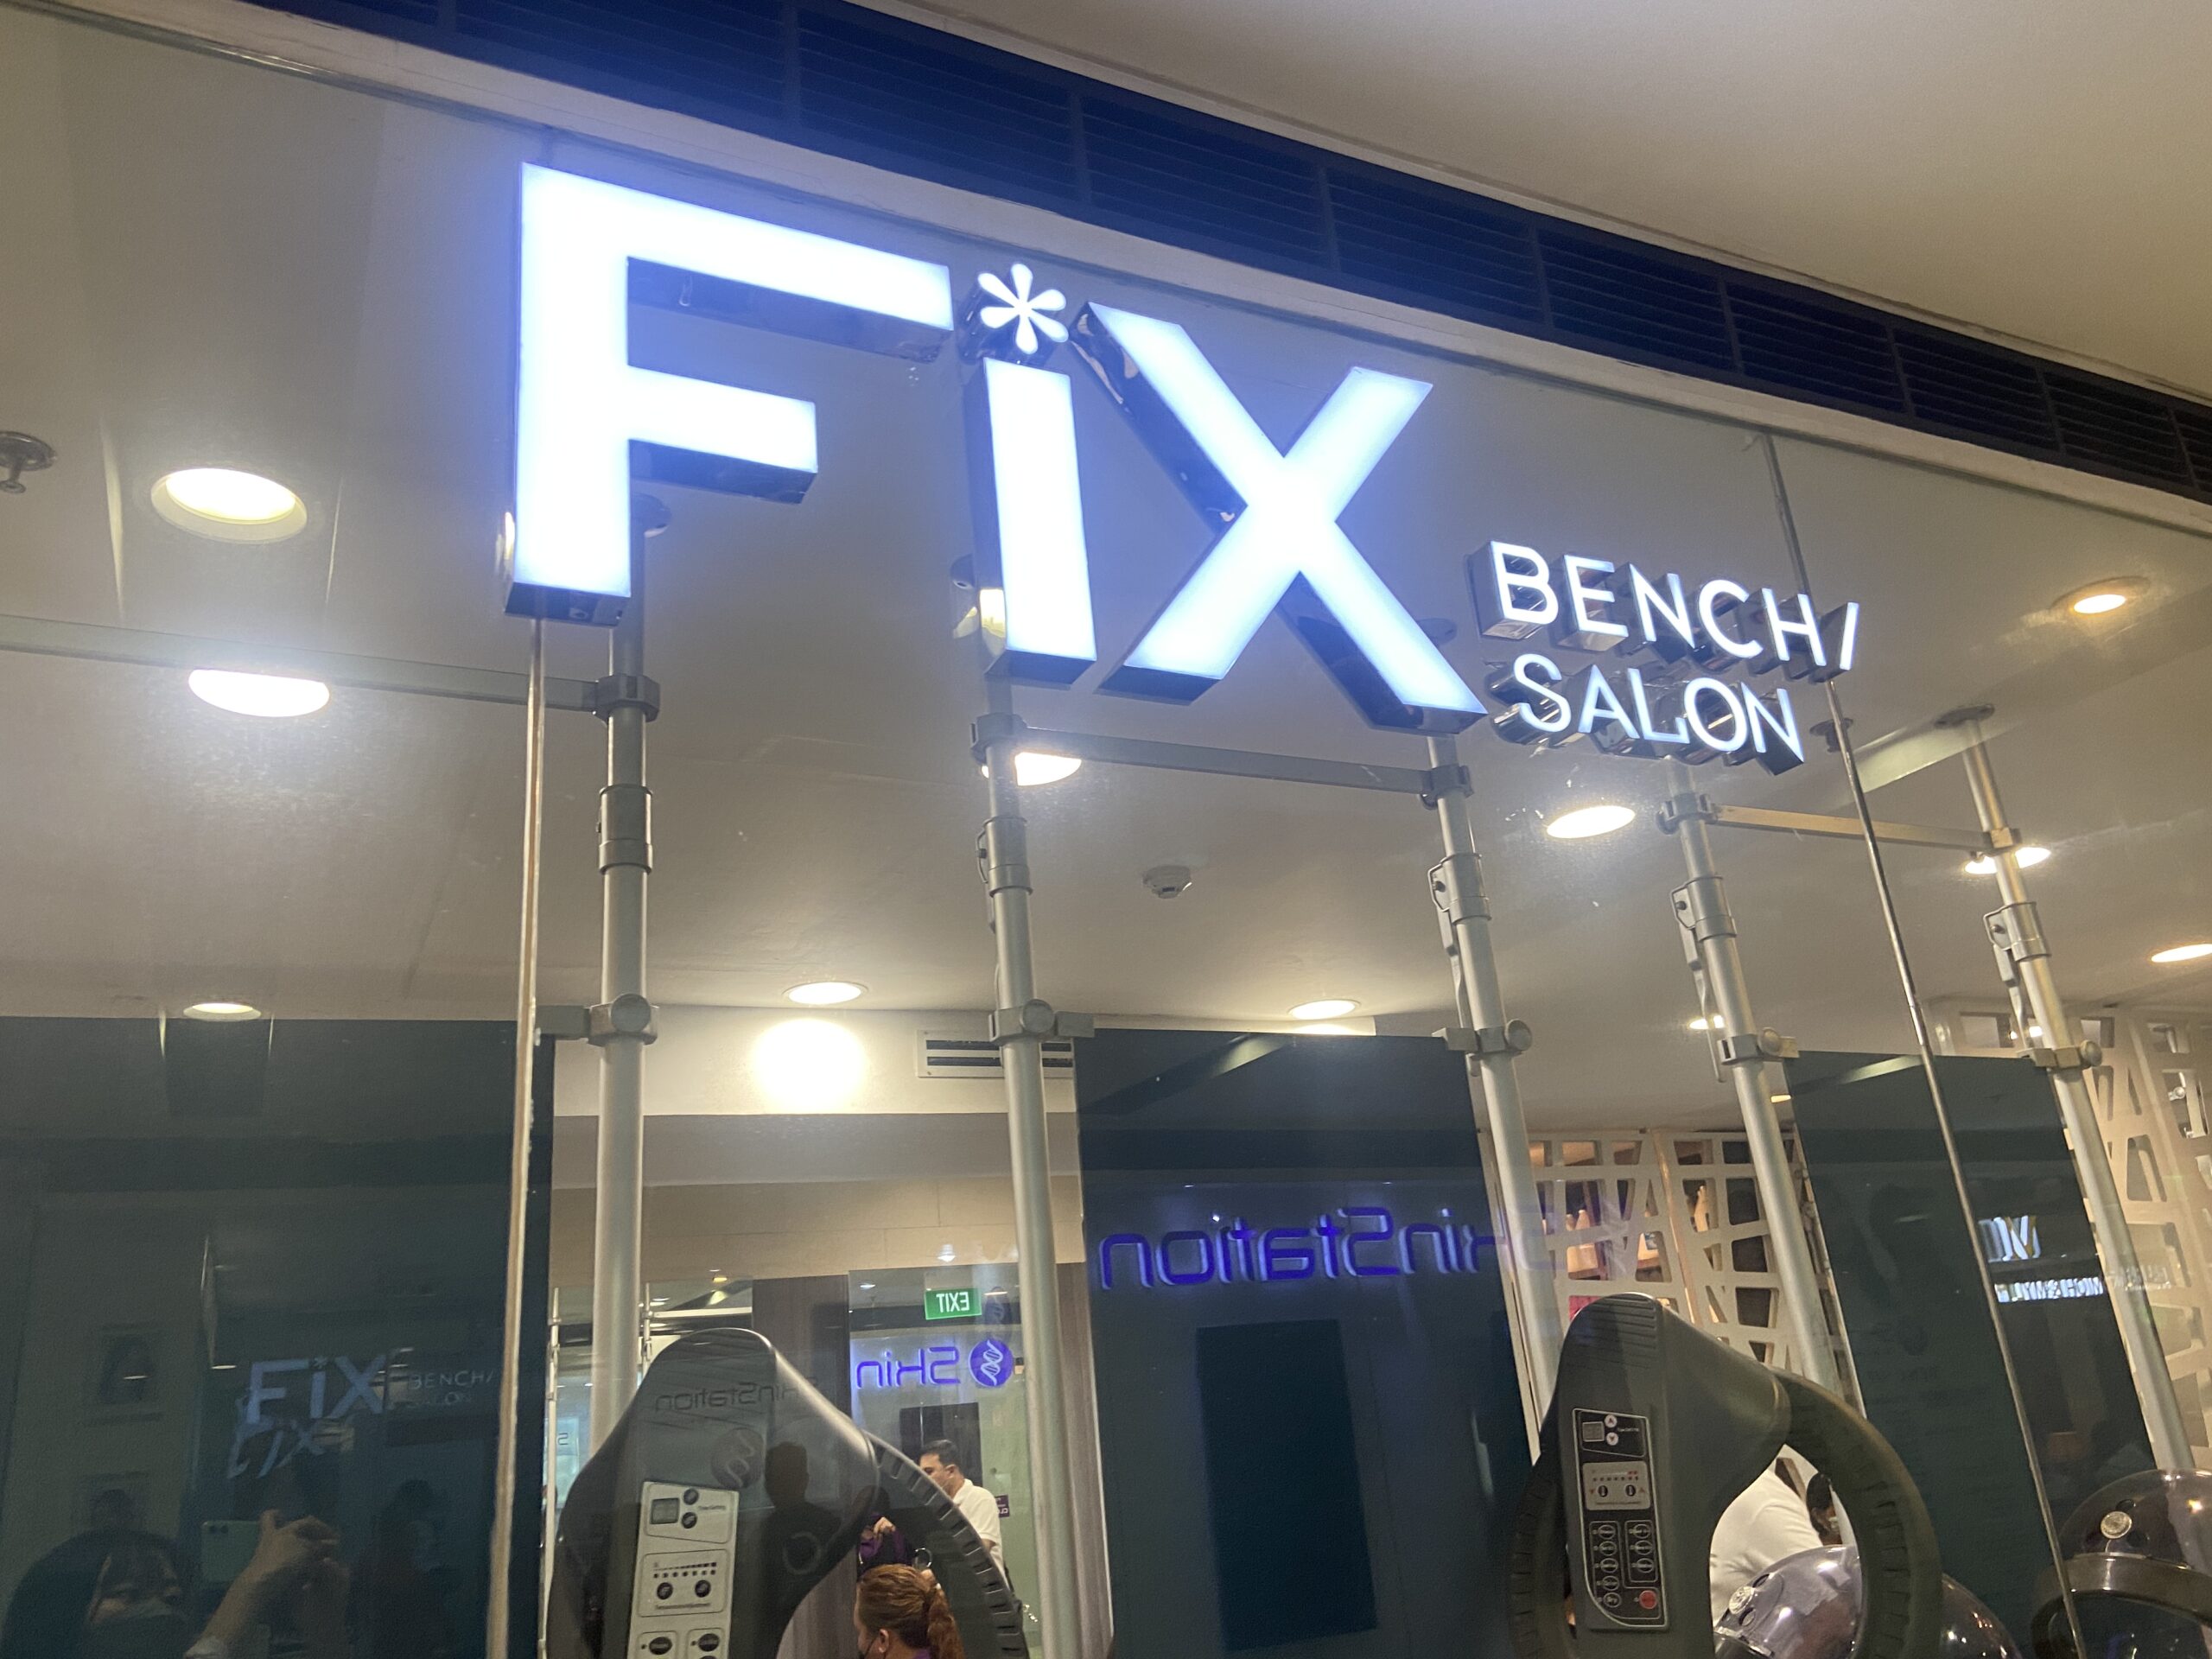 Fix bench salon